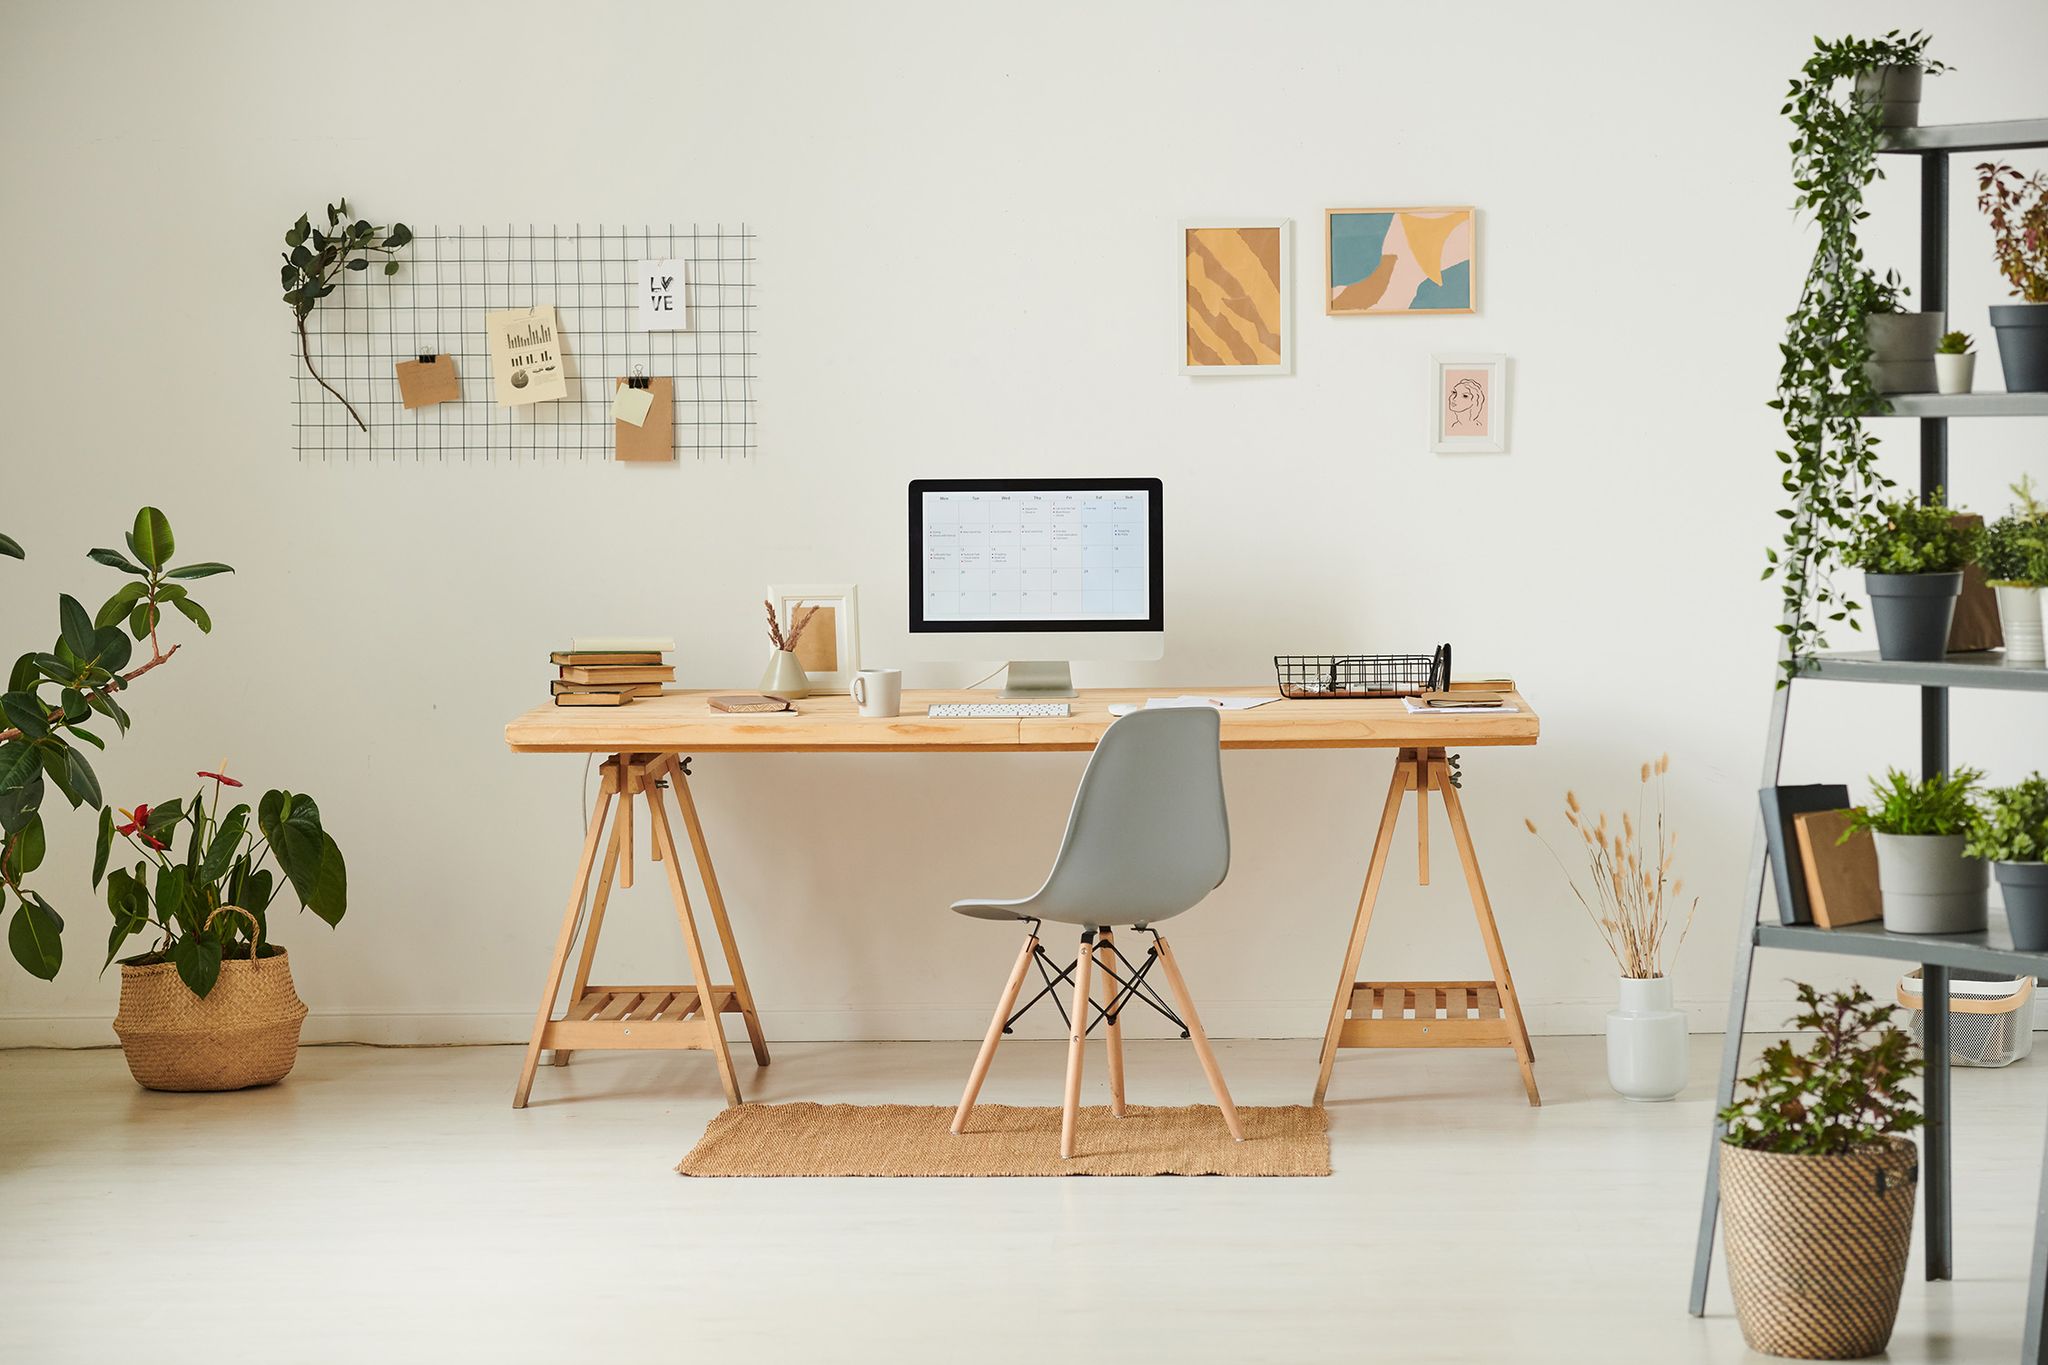 Mid Shelf Home Desk Accessories, Work From Home Desks